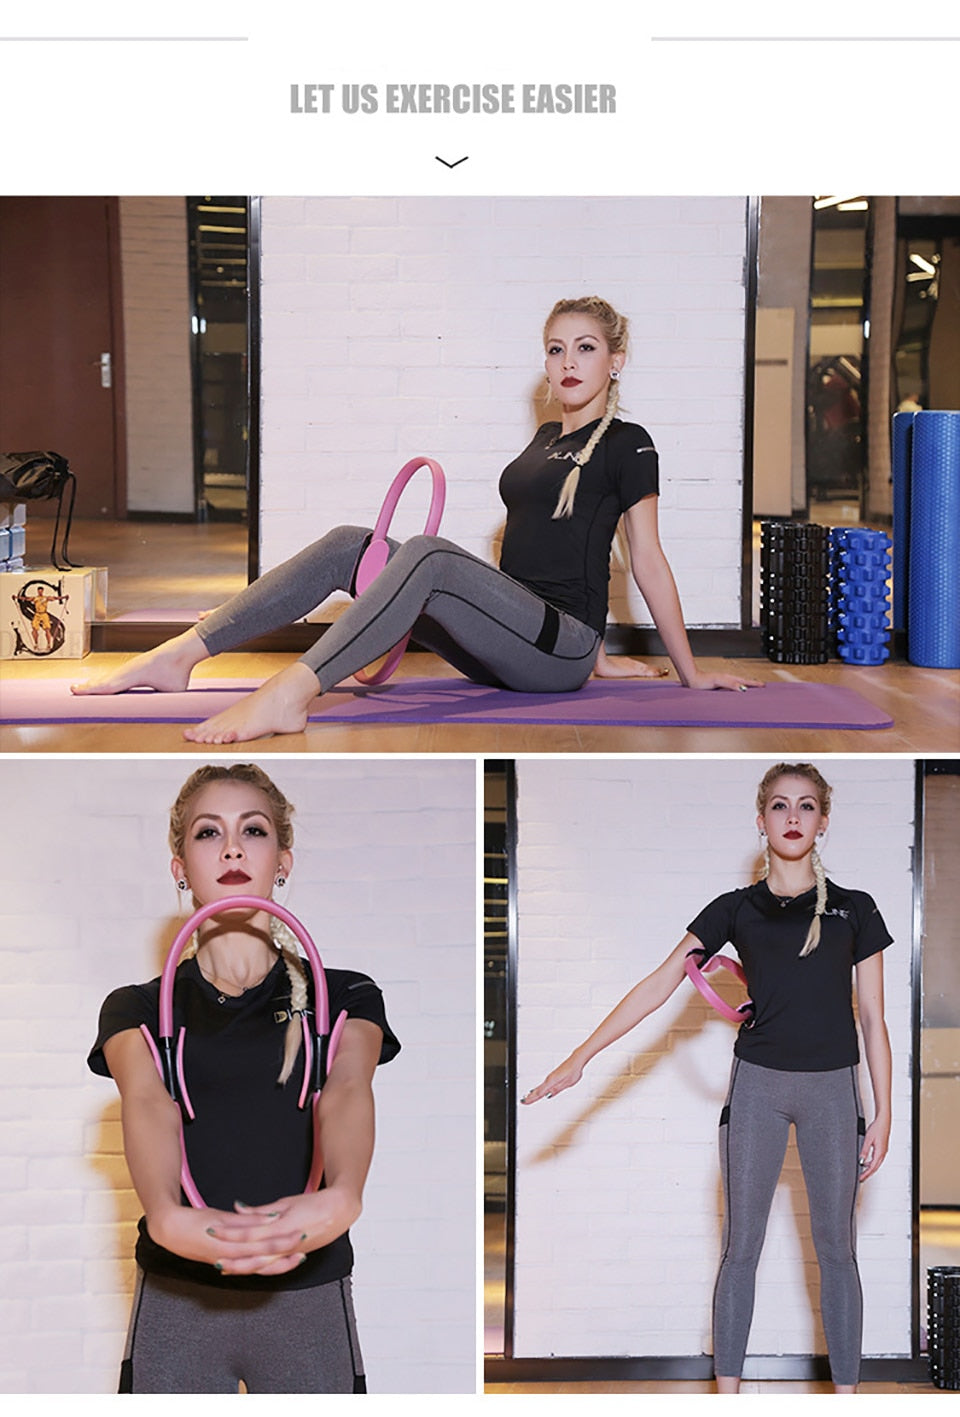 Quality-Yoga-Pilates-Ring-Magic-Wrap-Slimming-Body-Building-Training-Heavy-Duty-PP+NBR-Material-Yoga-Circle-5-Farbes